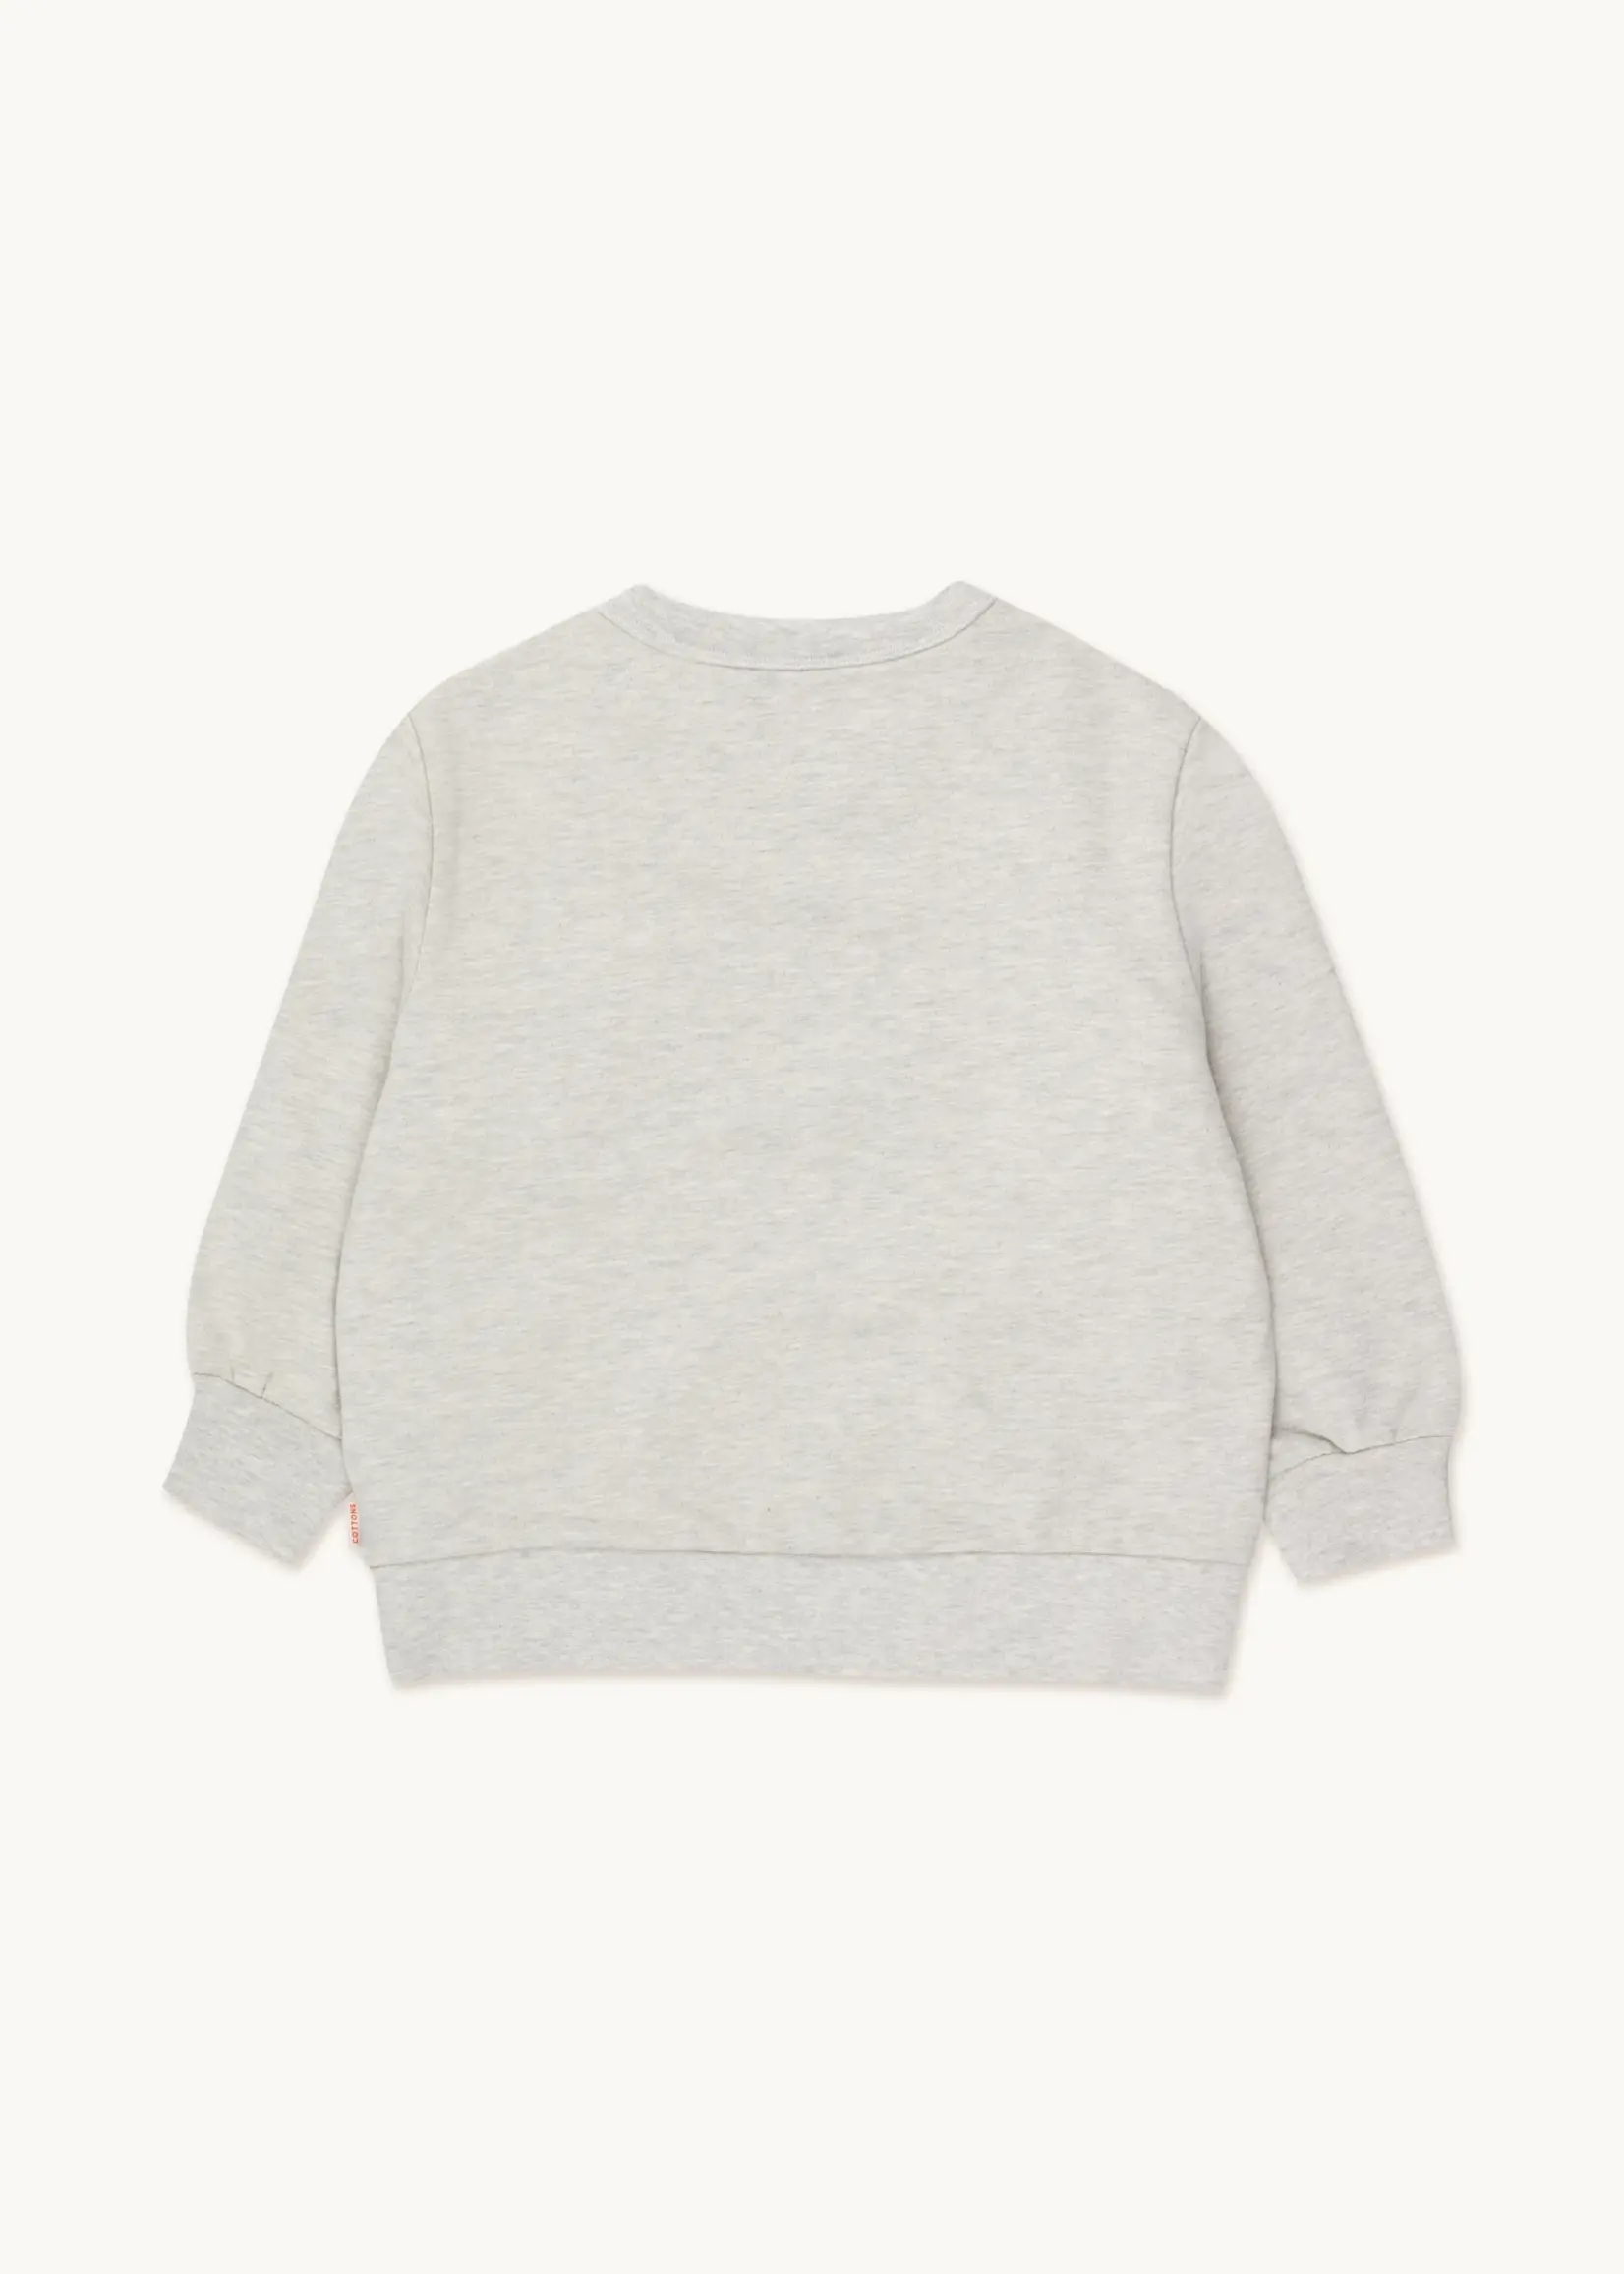 Tiny Cottons Tupelo sweatshirt medium grey heather - Tiny Cottons